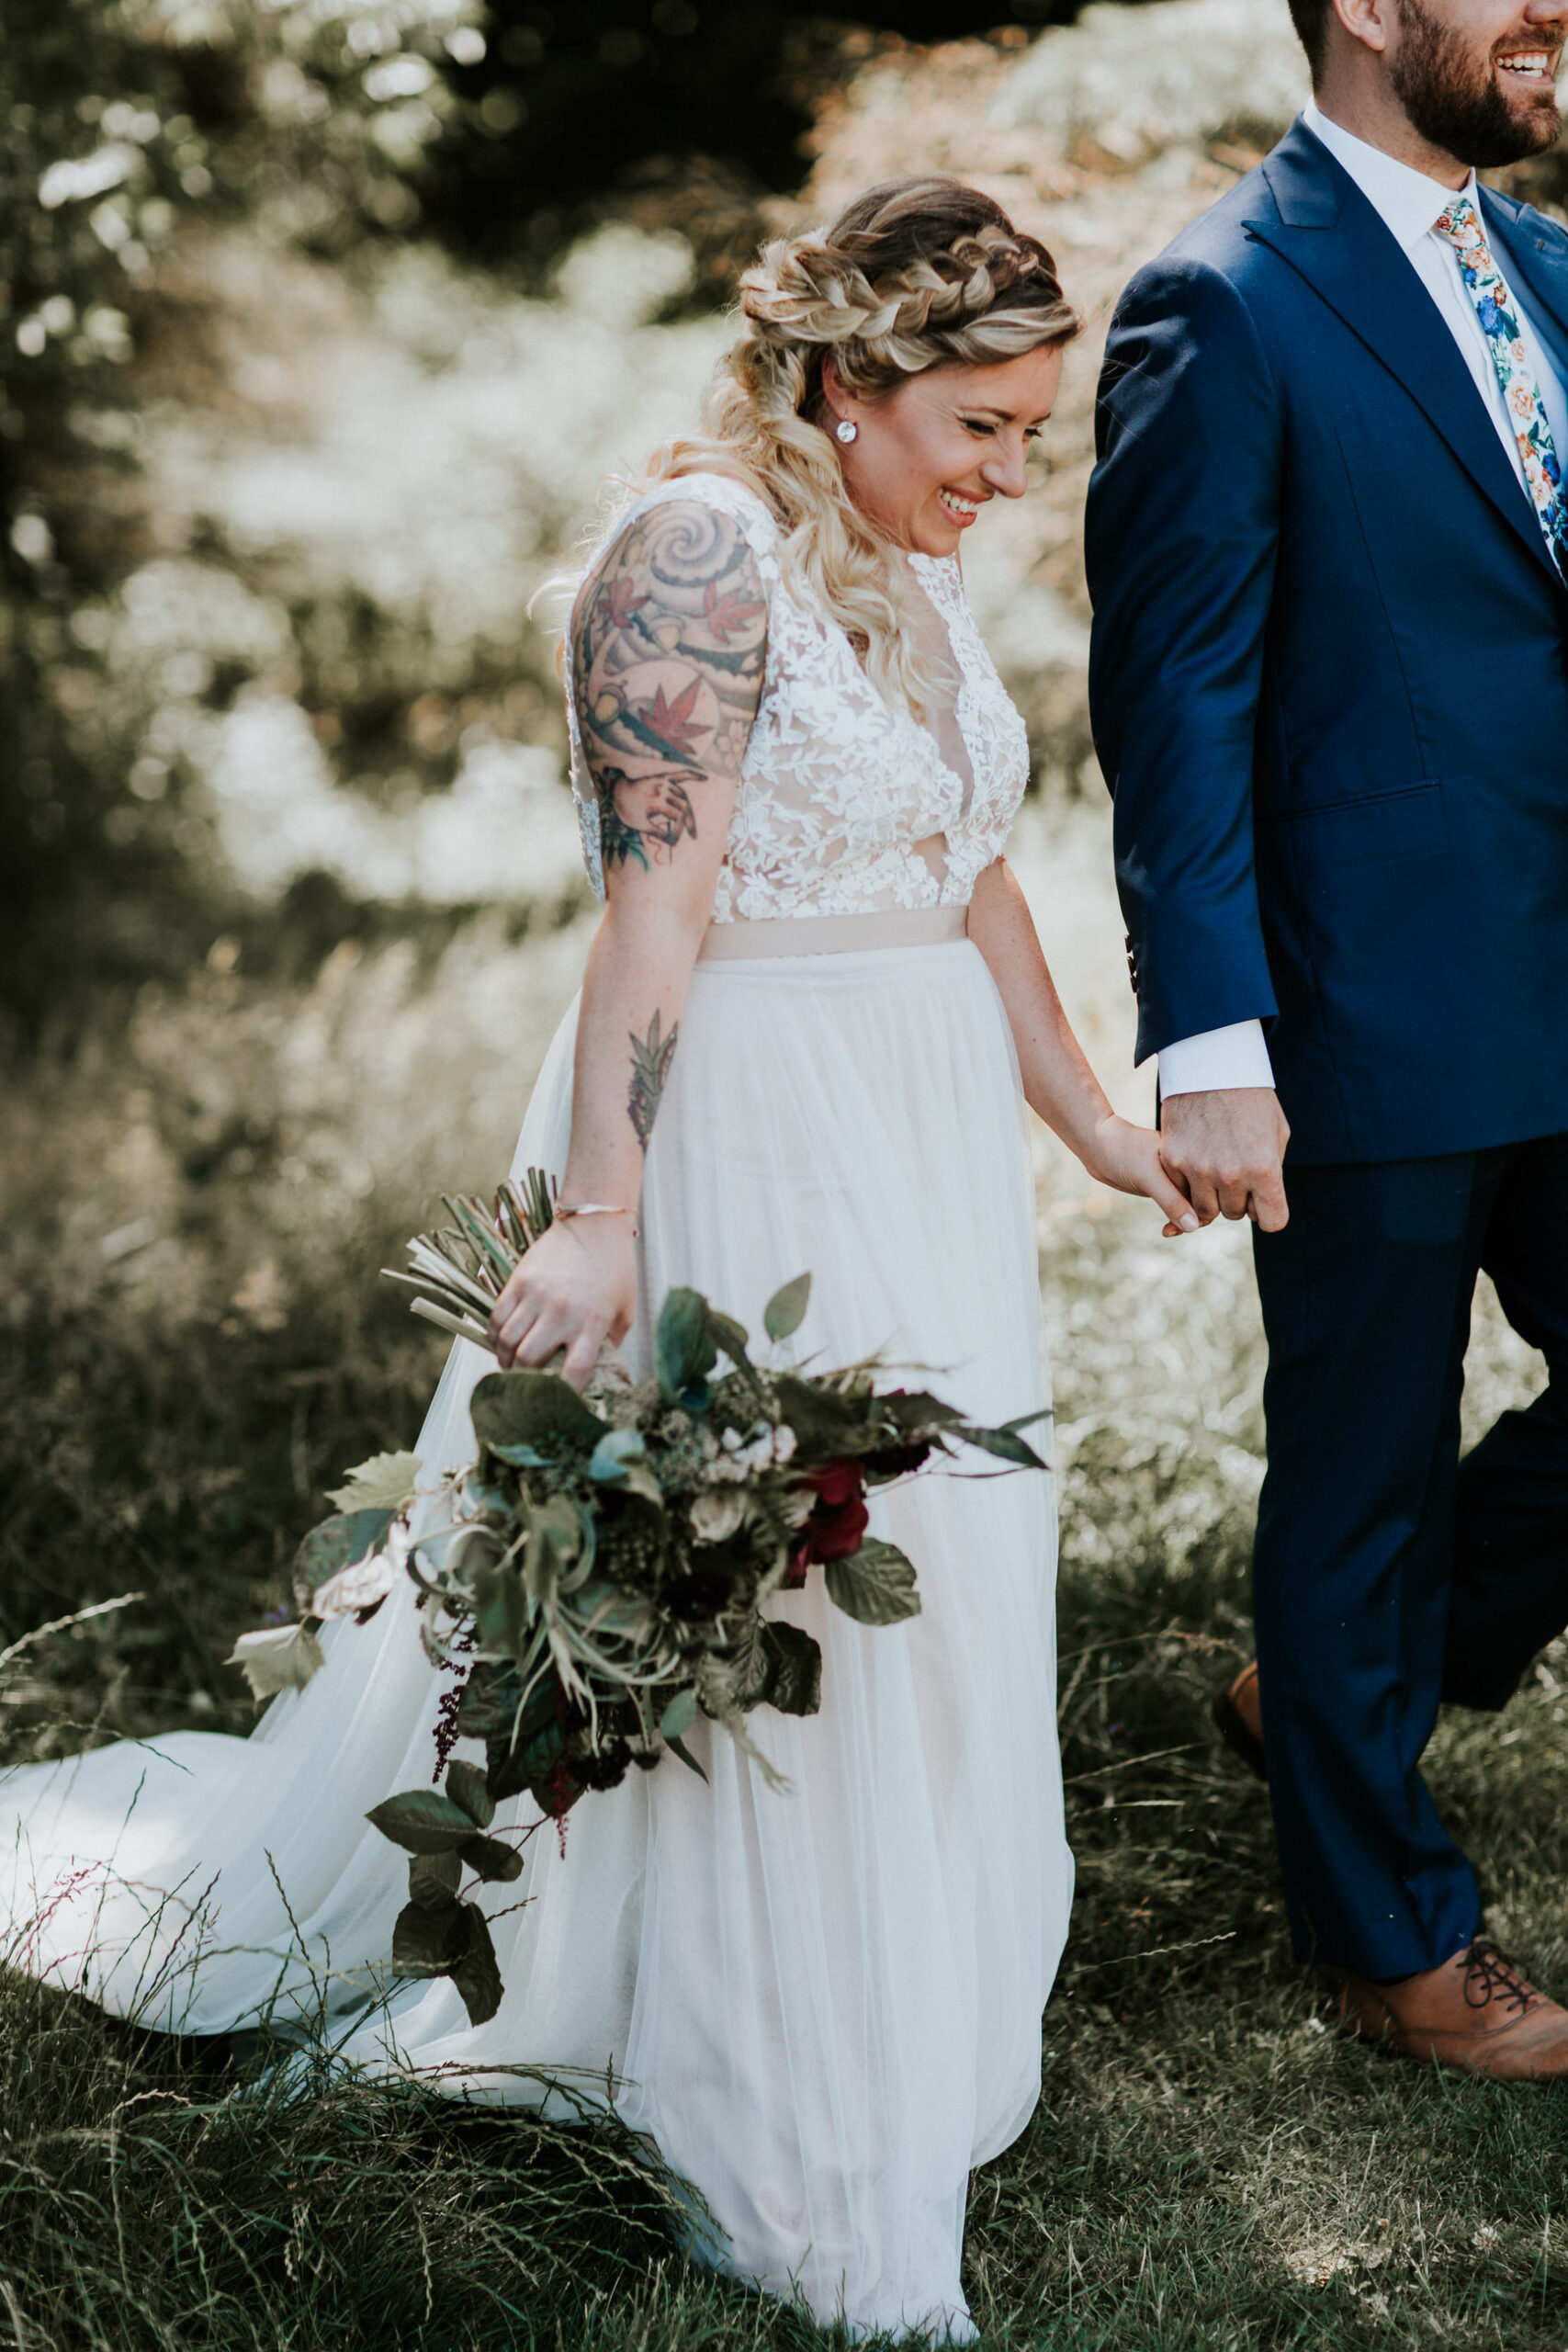 FAMILY HOME OUTDOOR WEDDING | JASON + CARRIE - Brandon Scott Photography